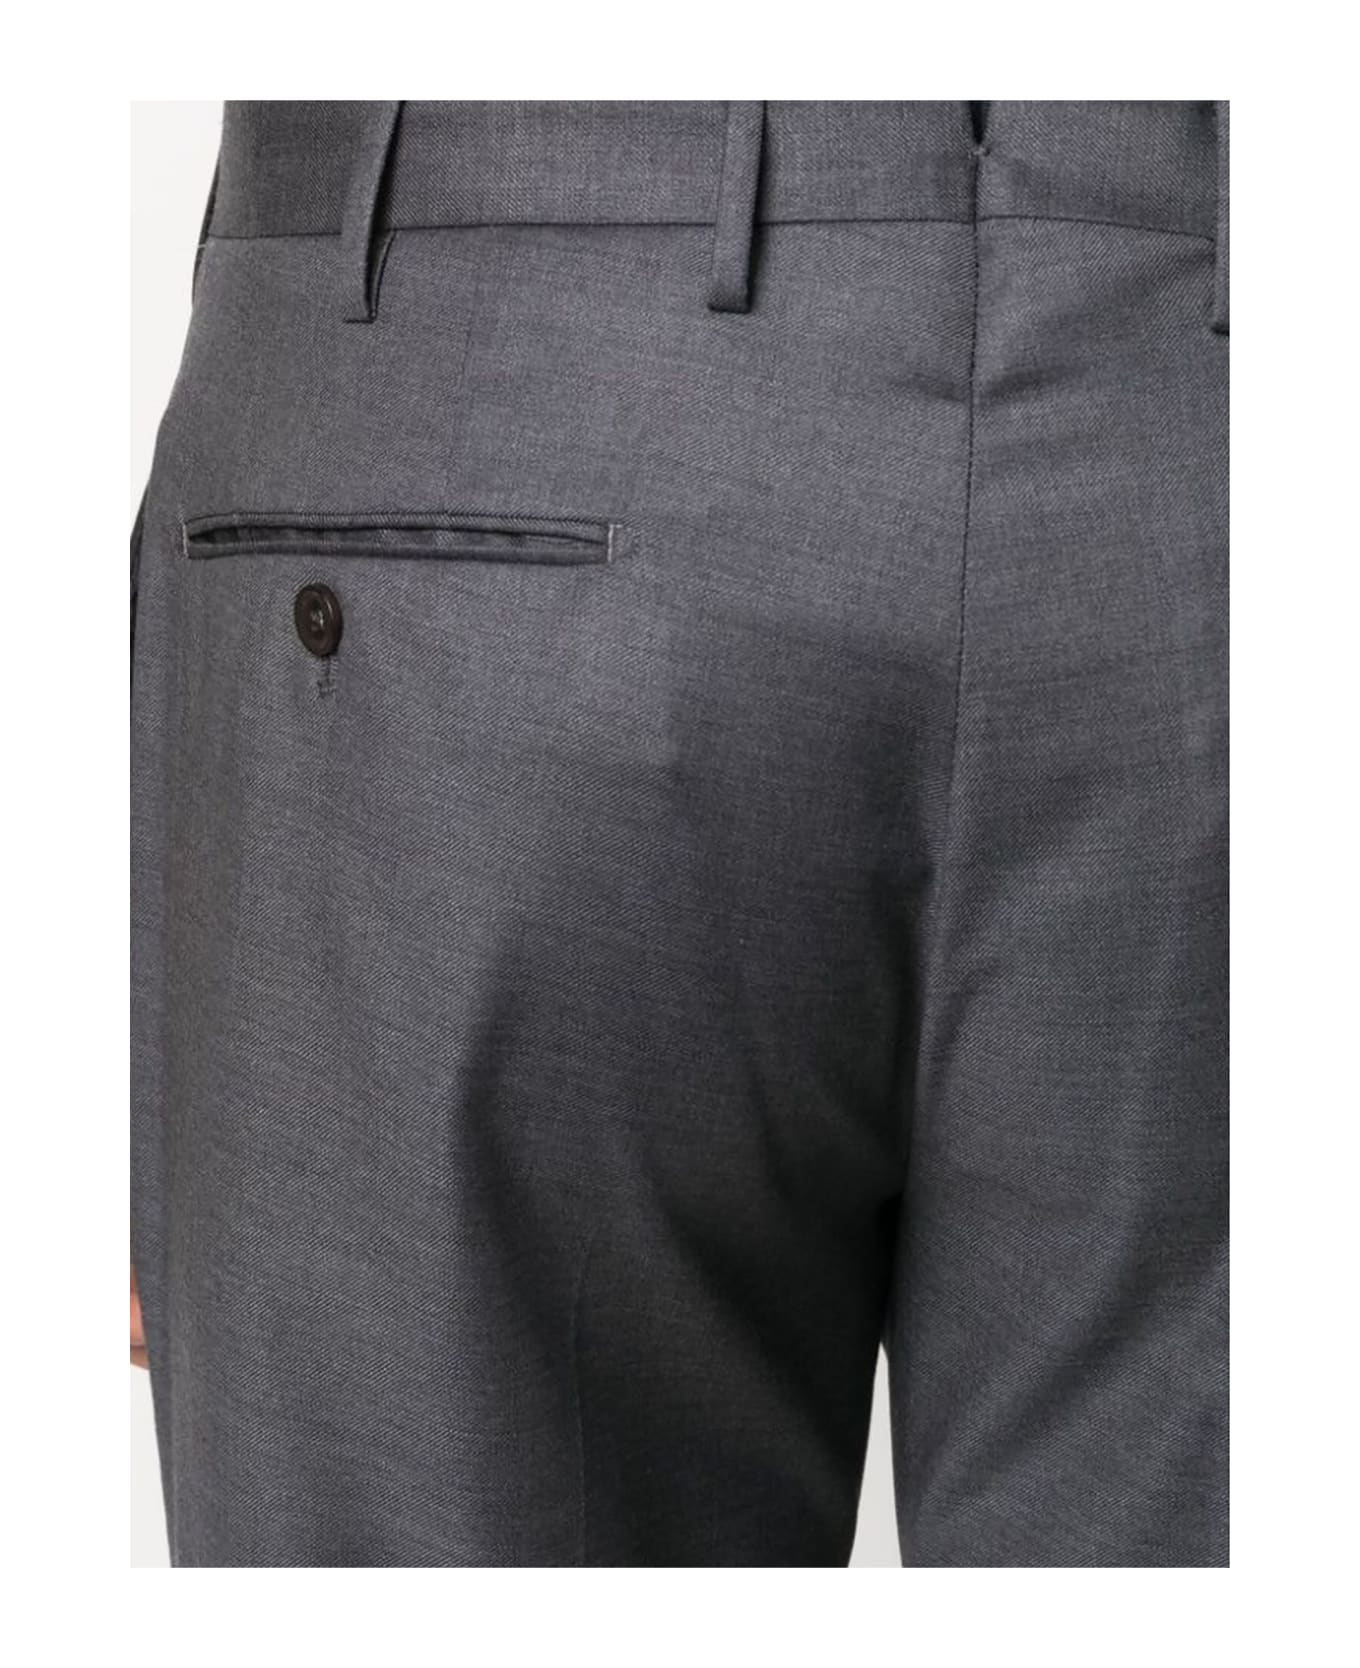 Incotex Grey Virgin Wool Trousers - Grey